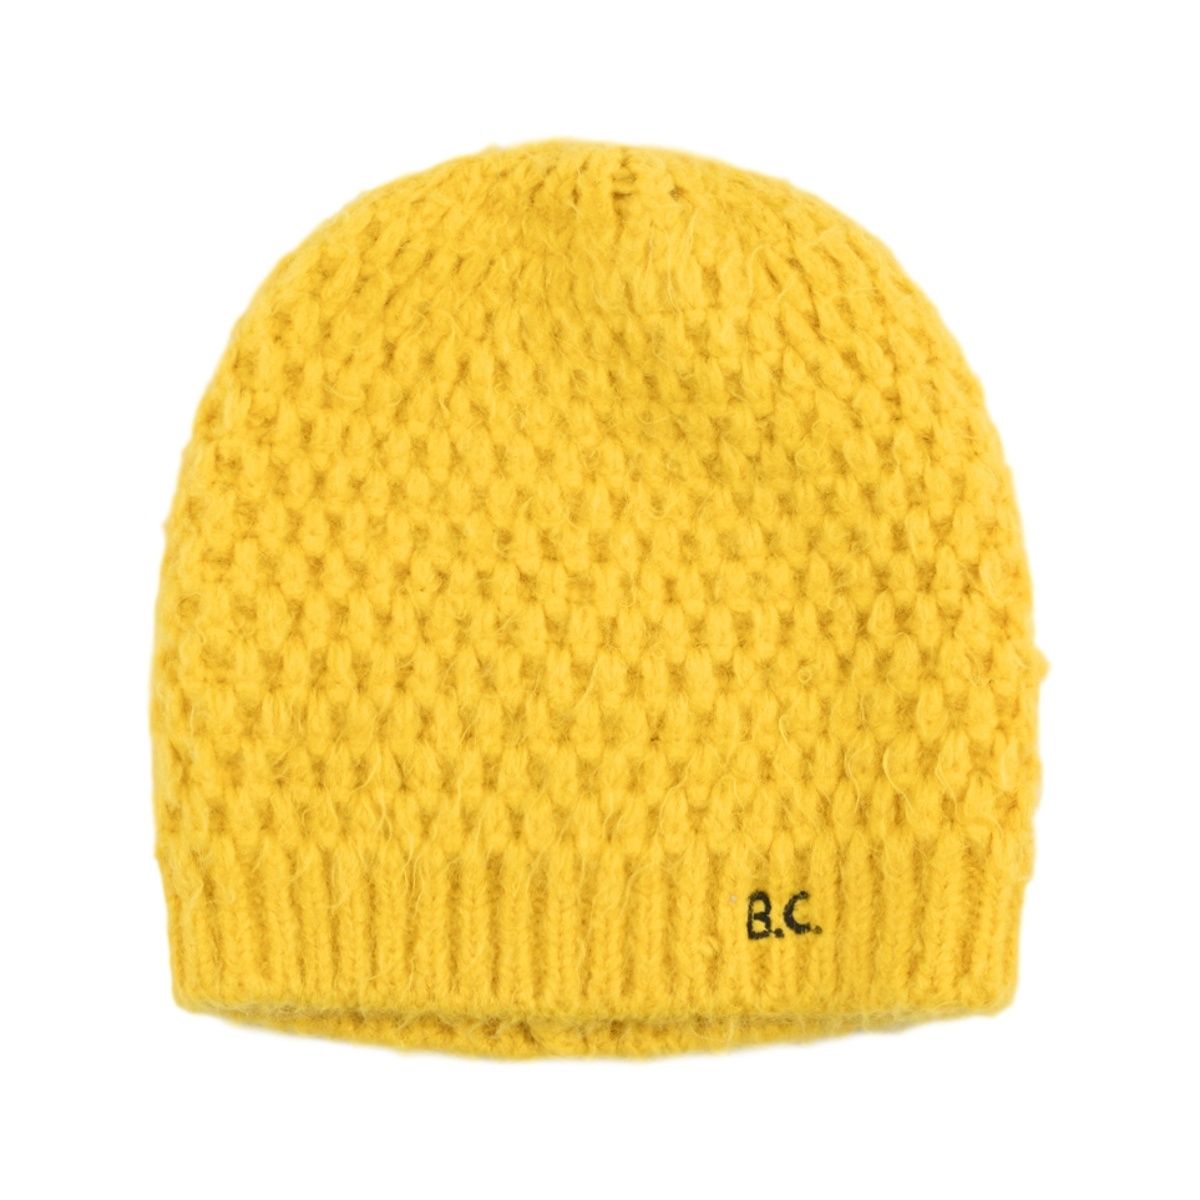 Bobo Choses - Soft Beanie yellow - Caps & hats - 219124 